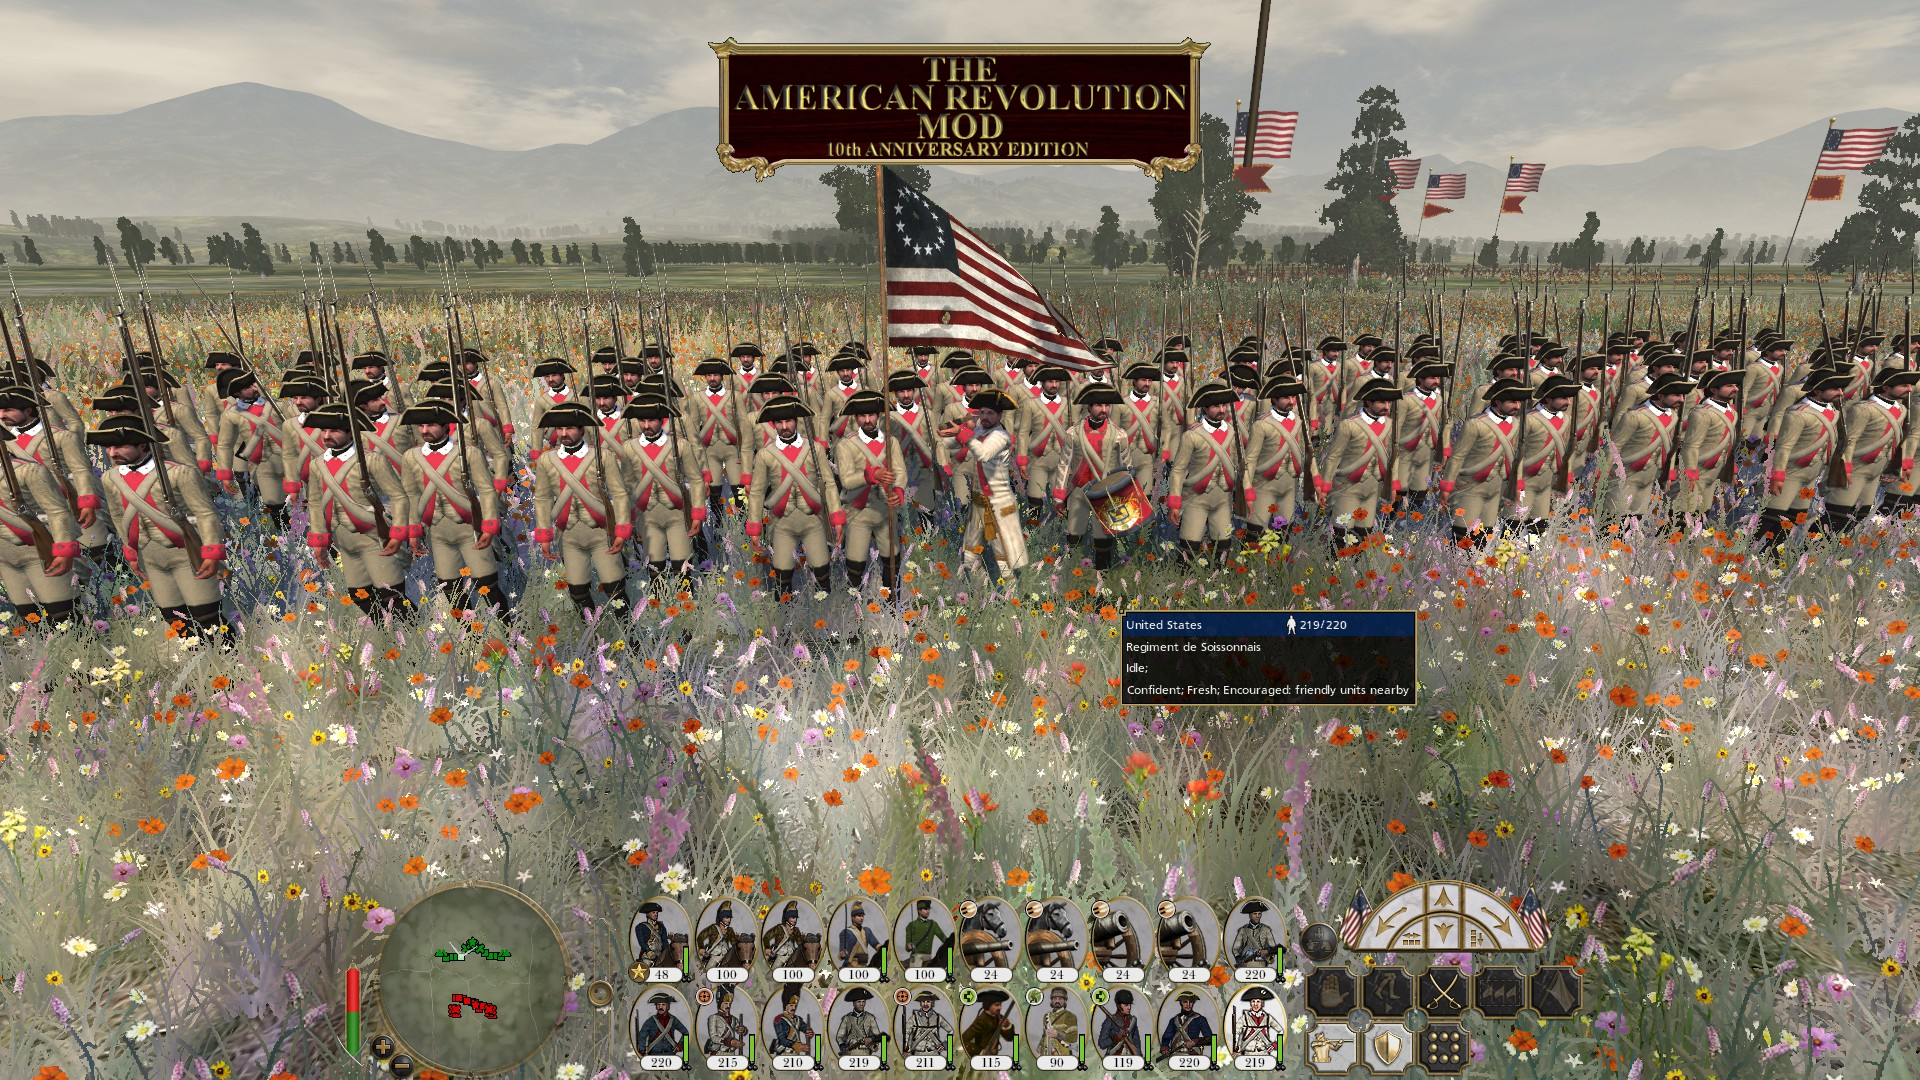 total war empire american revolution mod